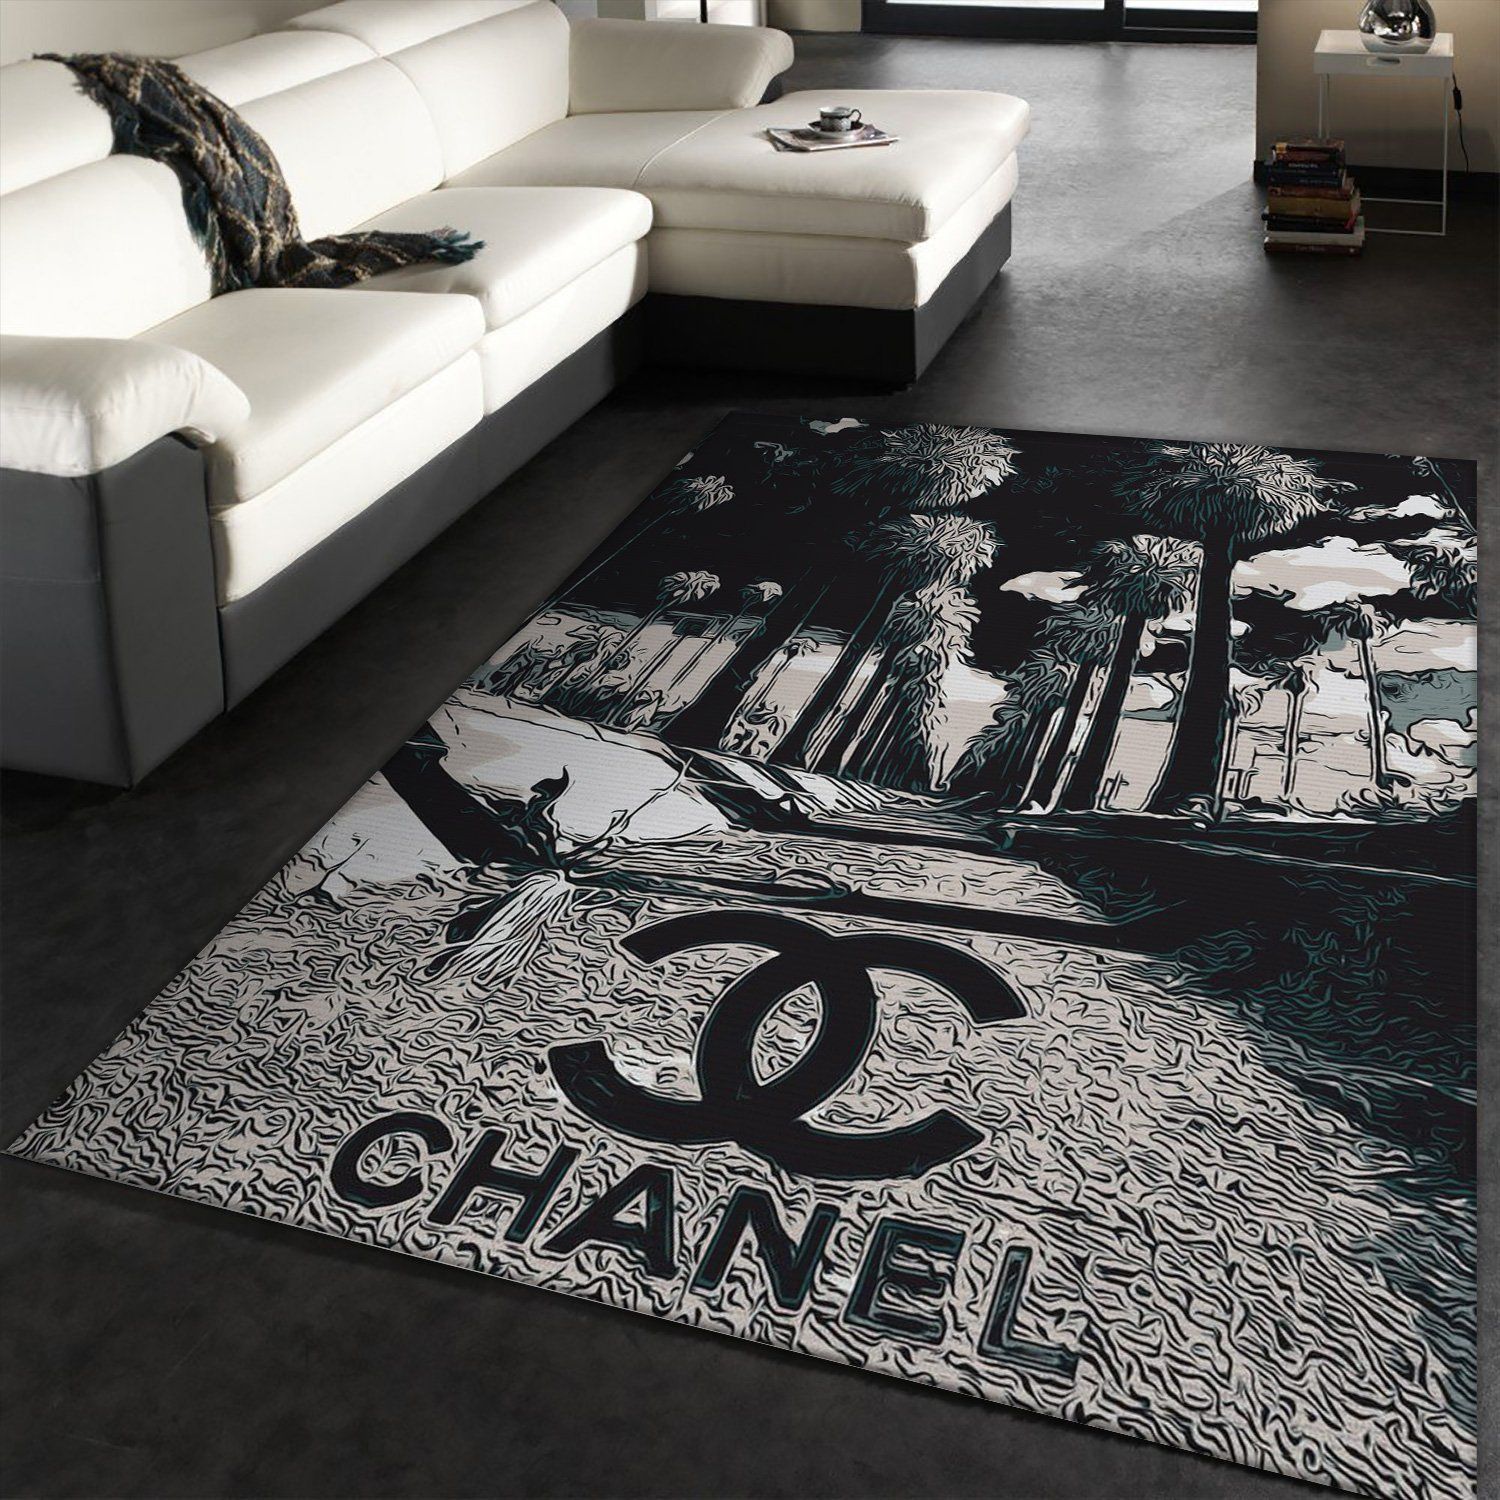 Chanel Area Rugs Fashion Brand Rug Floor Decor Home Decor